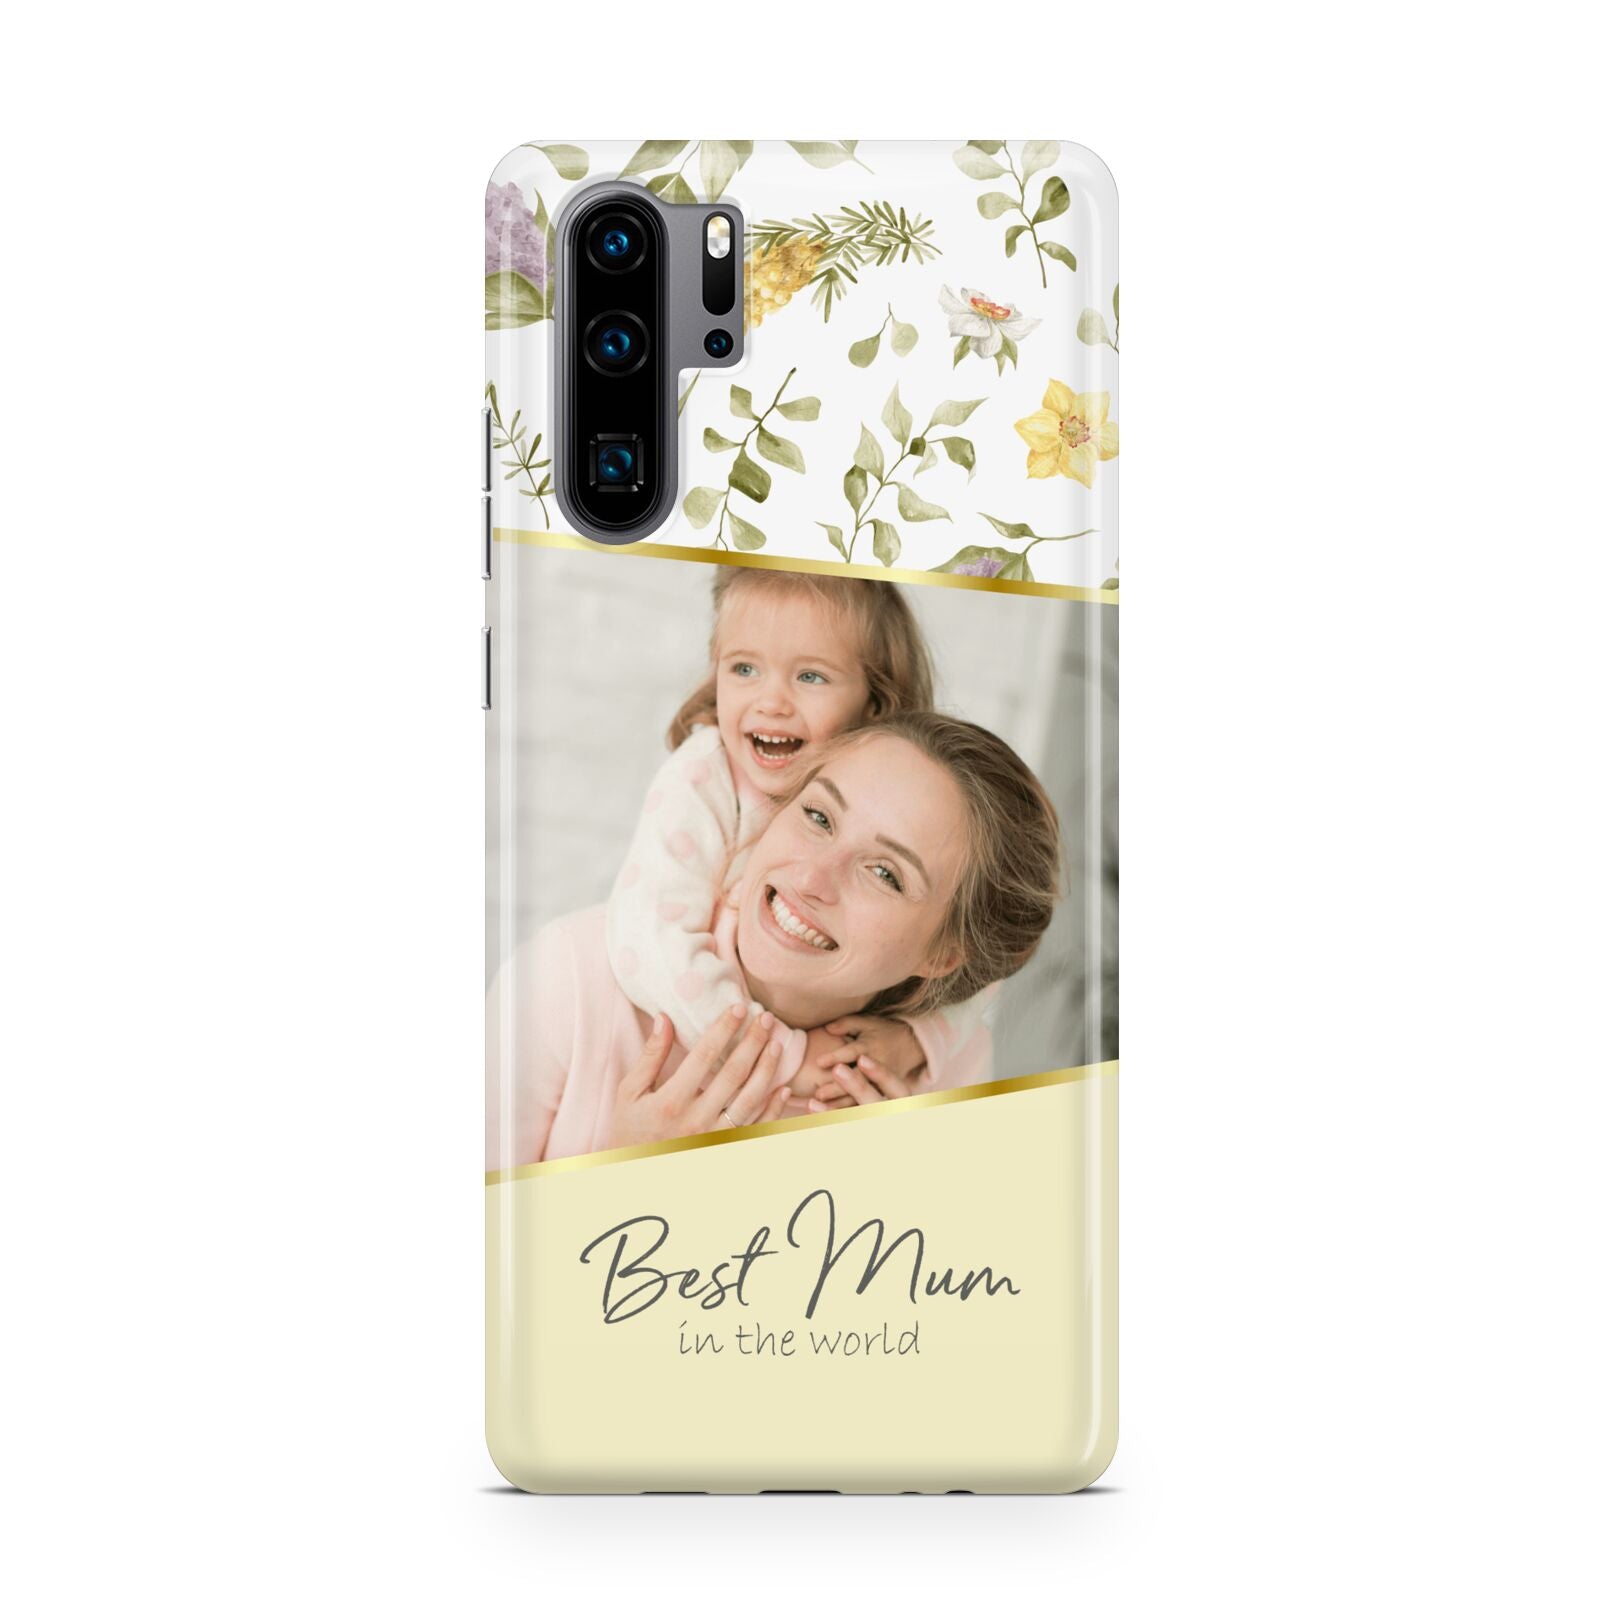 Personalised Best Mum Huawei P30 Pro Phone Case